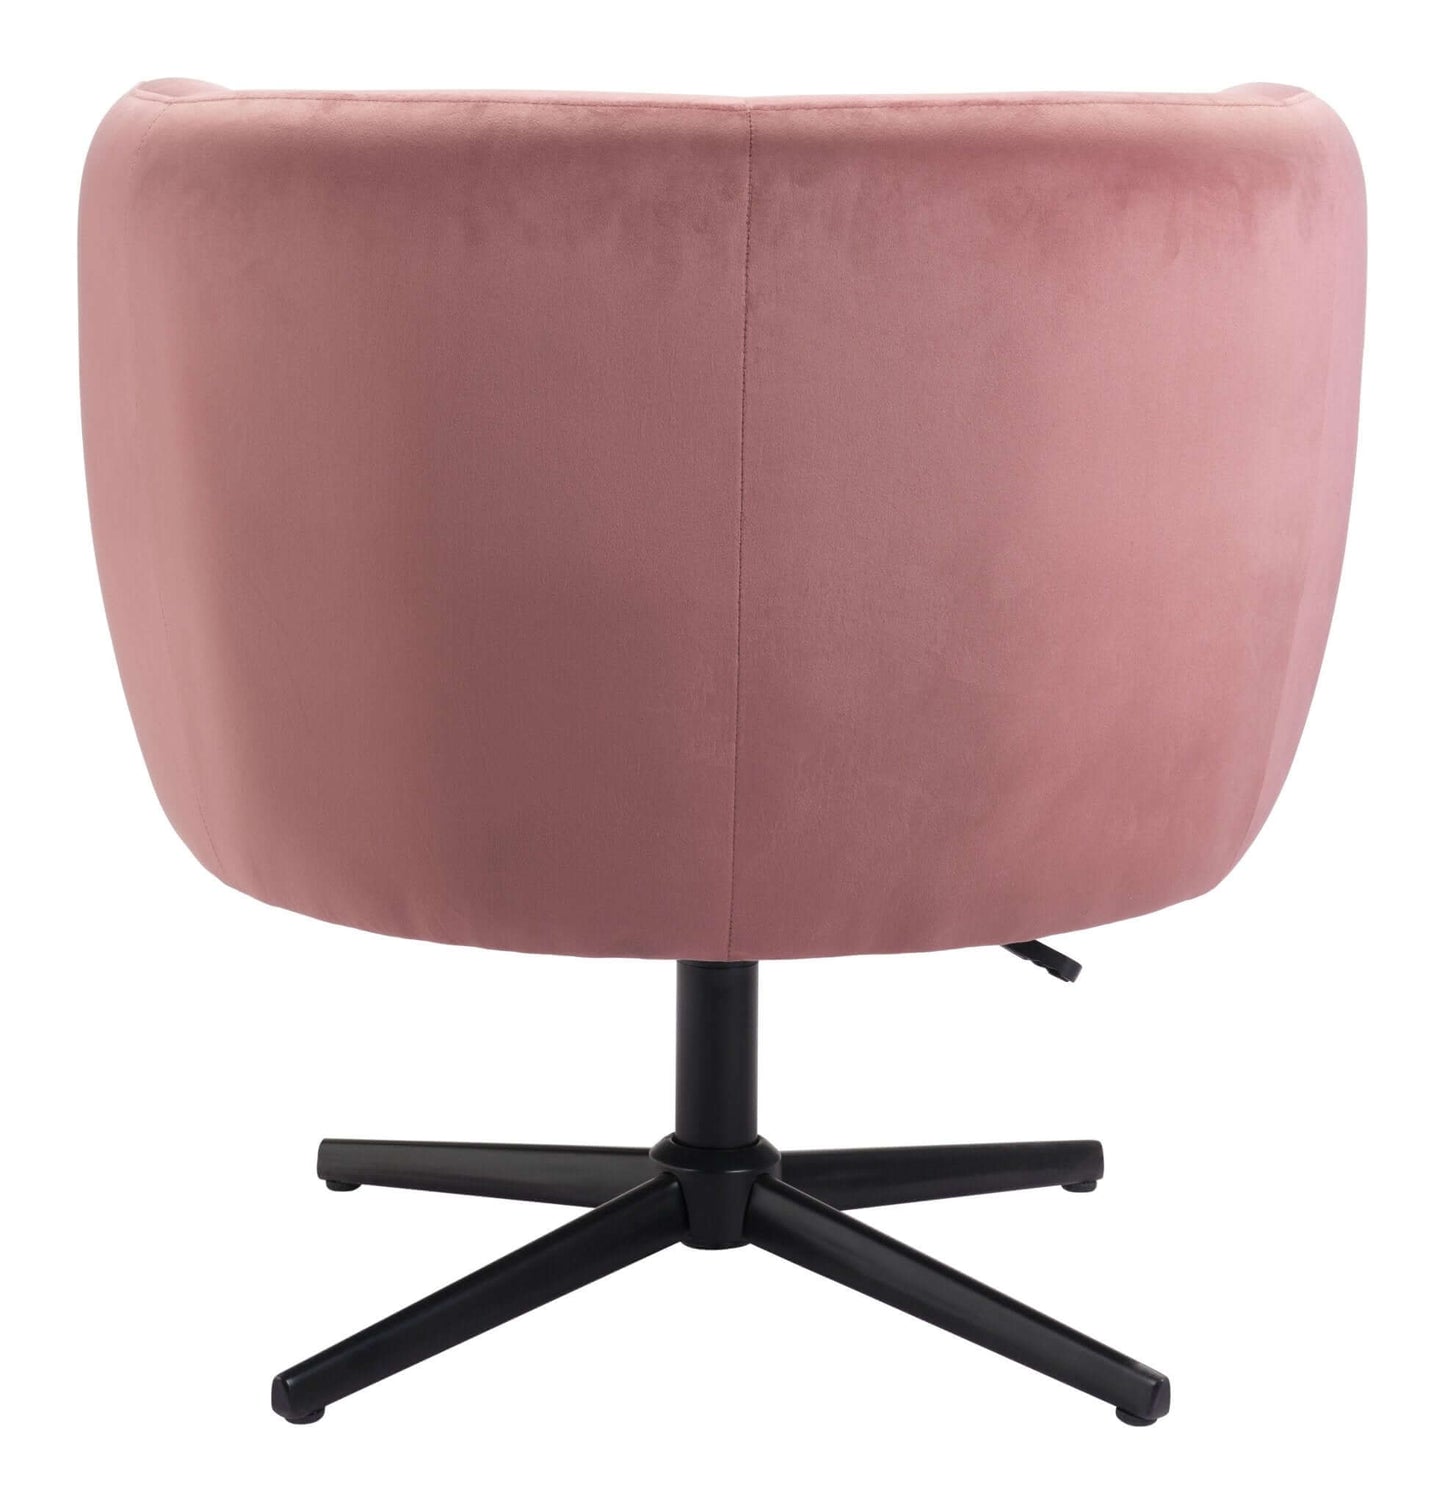 Elia Adjustable Lounge Accent Swivel Chair in Pink Velvet - Revel Sofa 